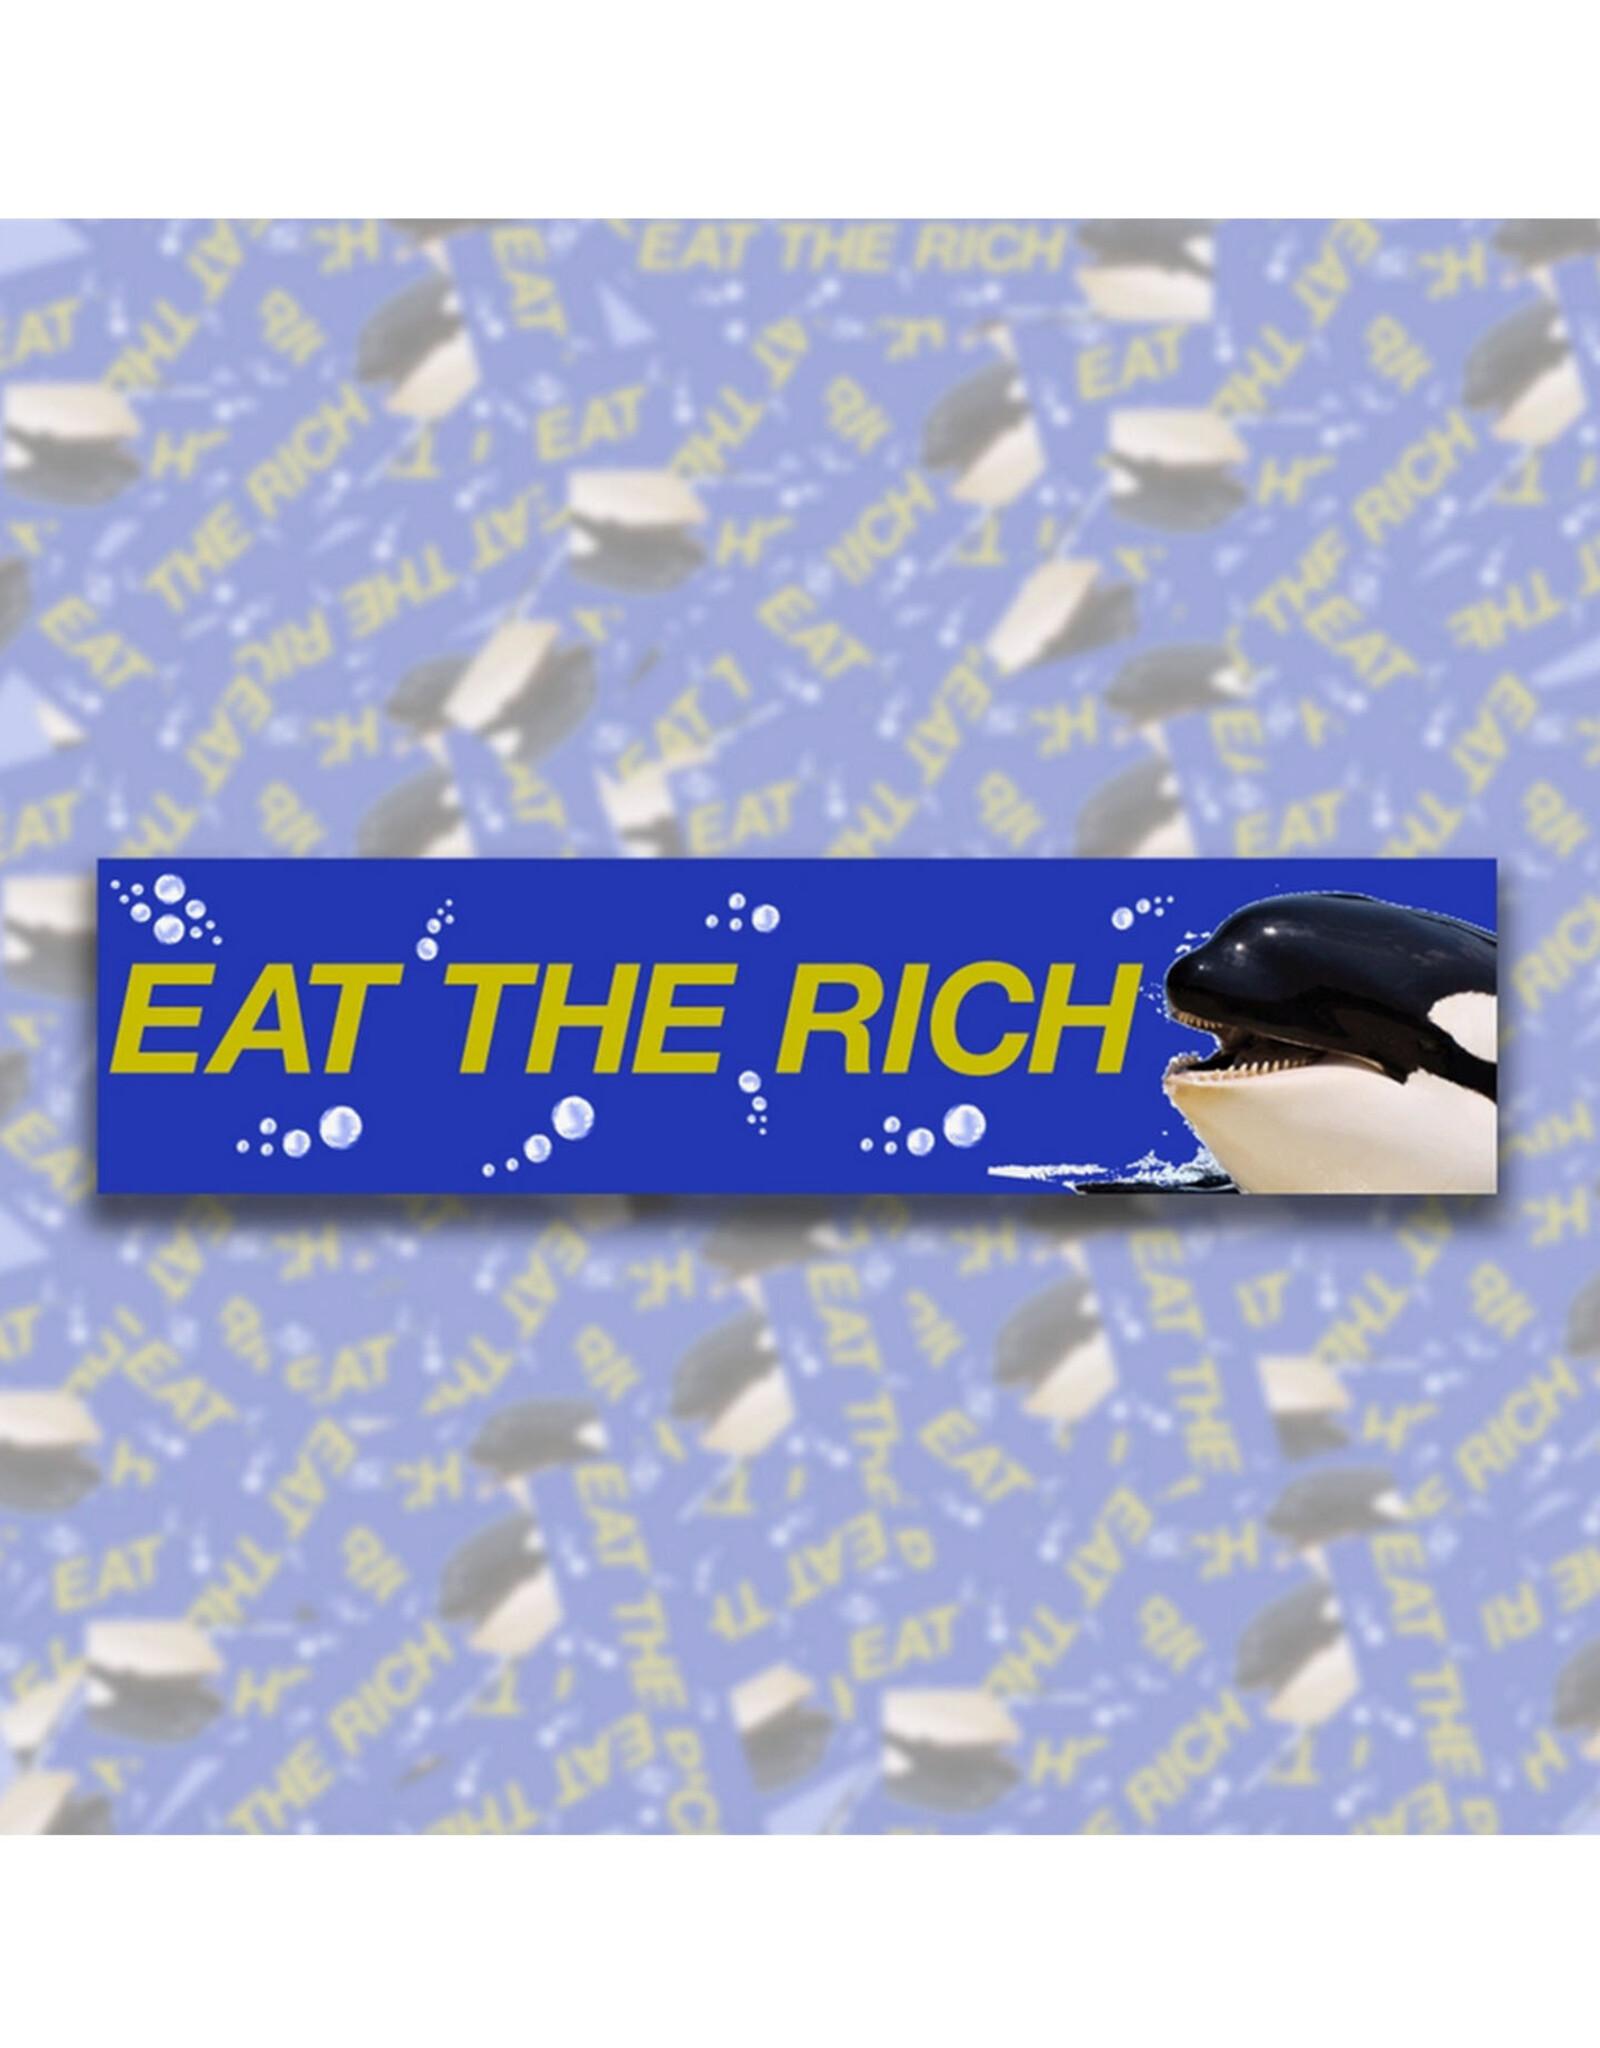 Eat the Rich Bumper Sticker